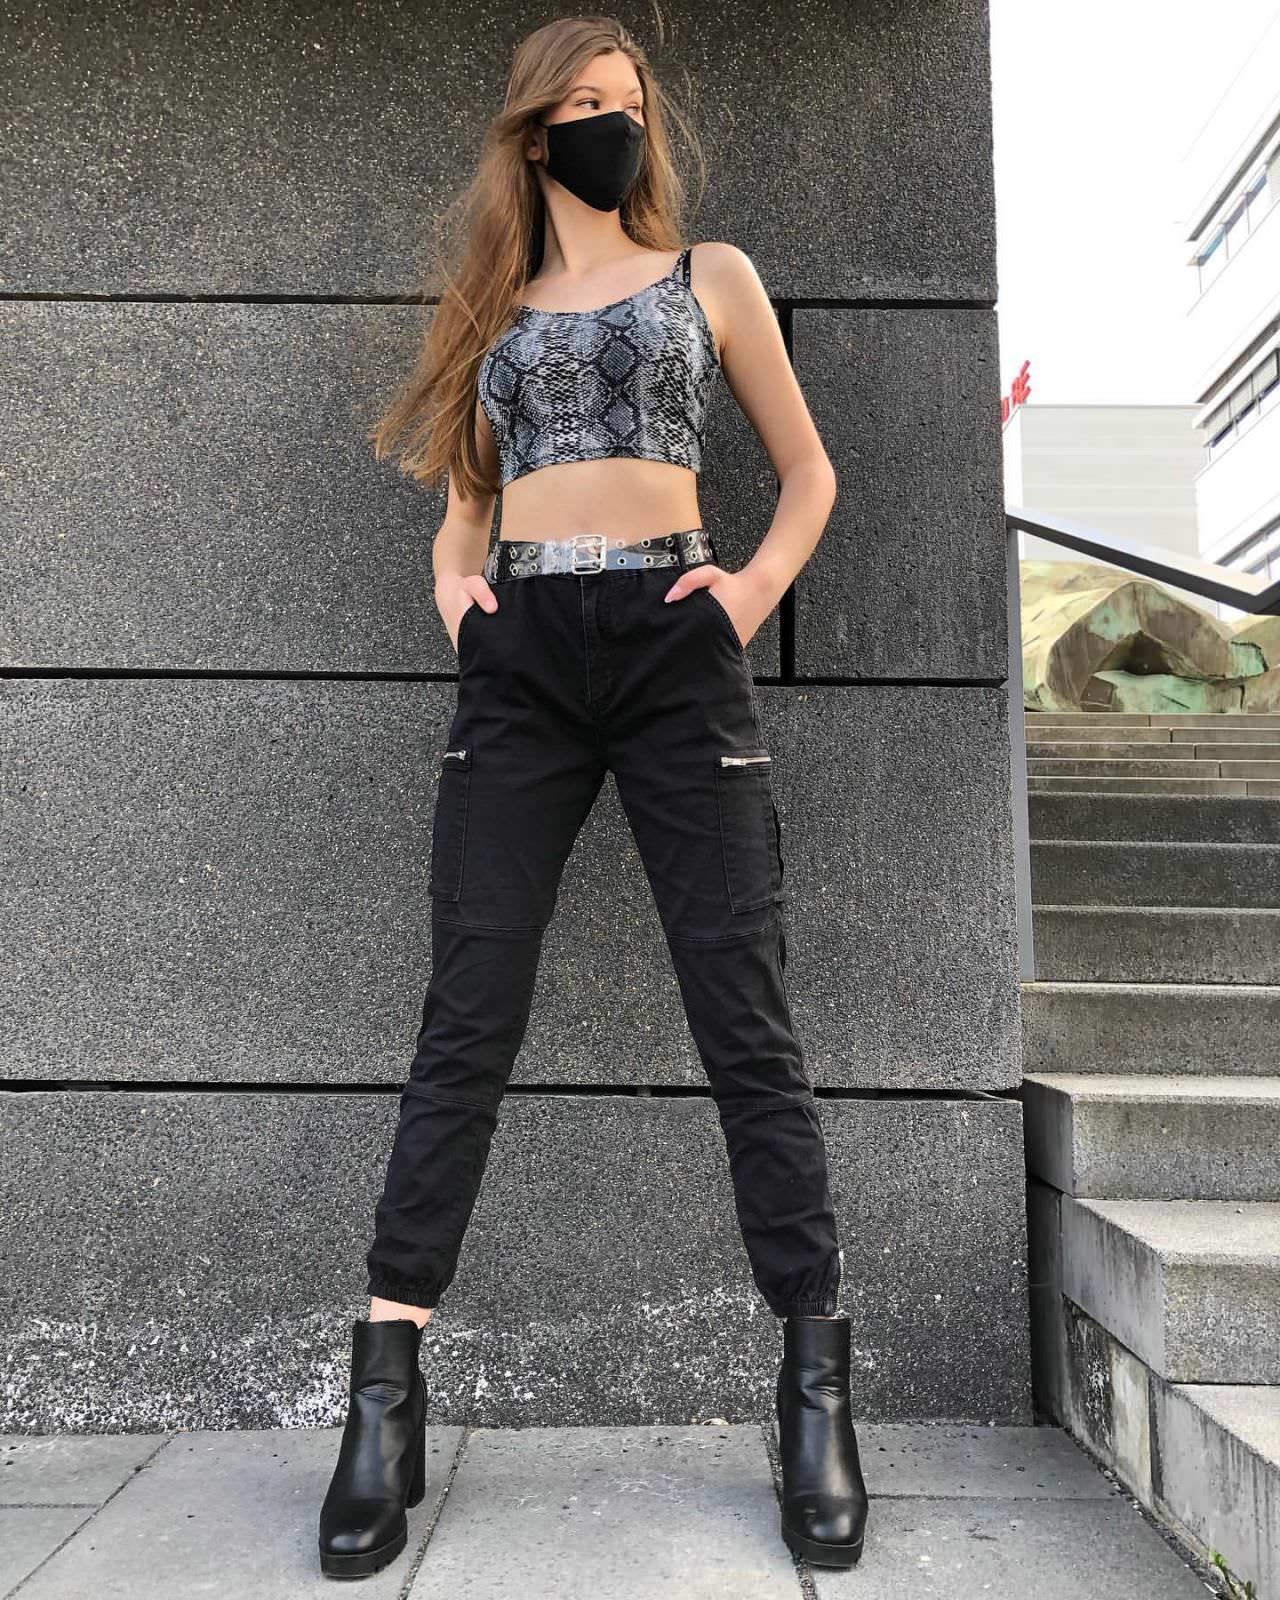 laura offermann posing in crop top and black pants 3